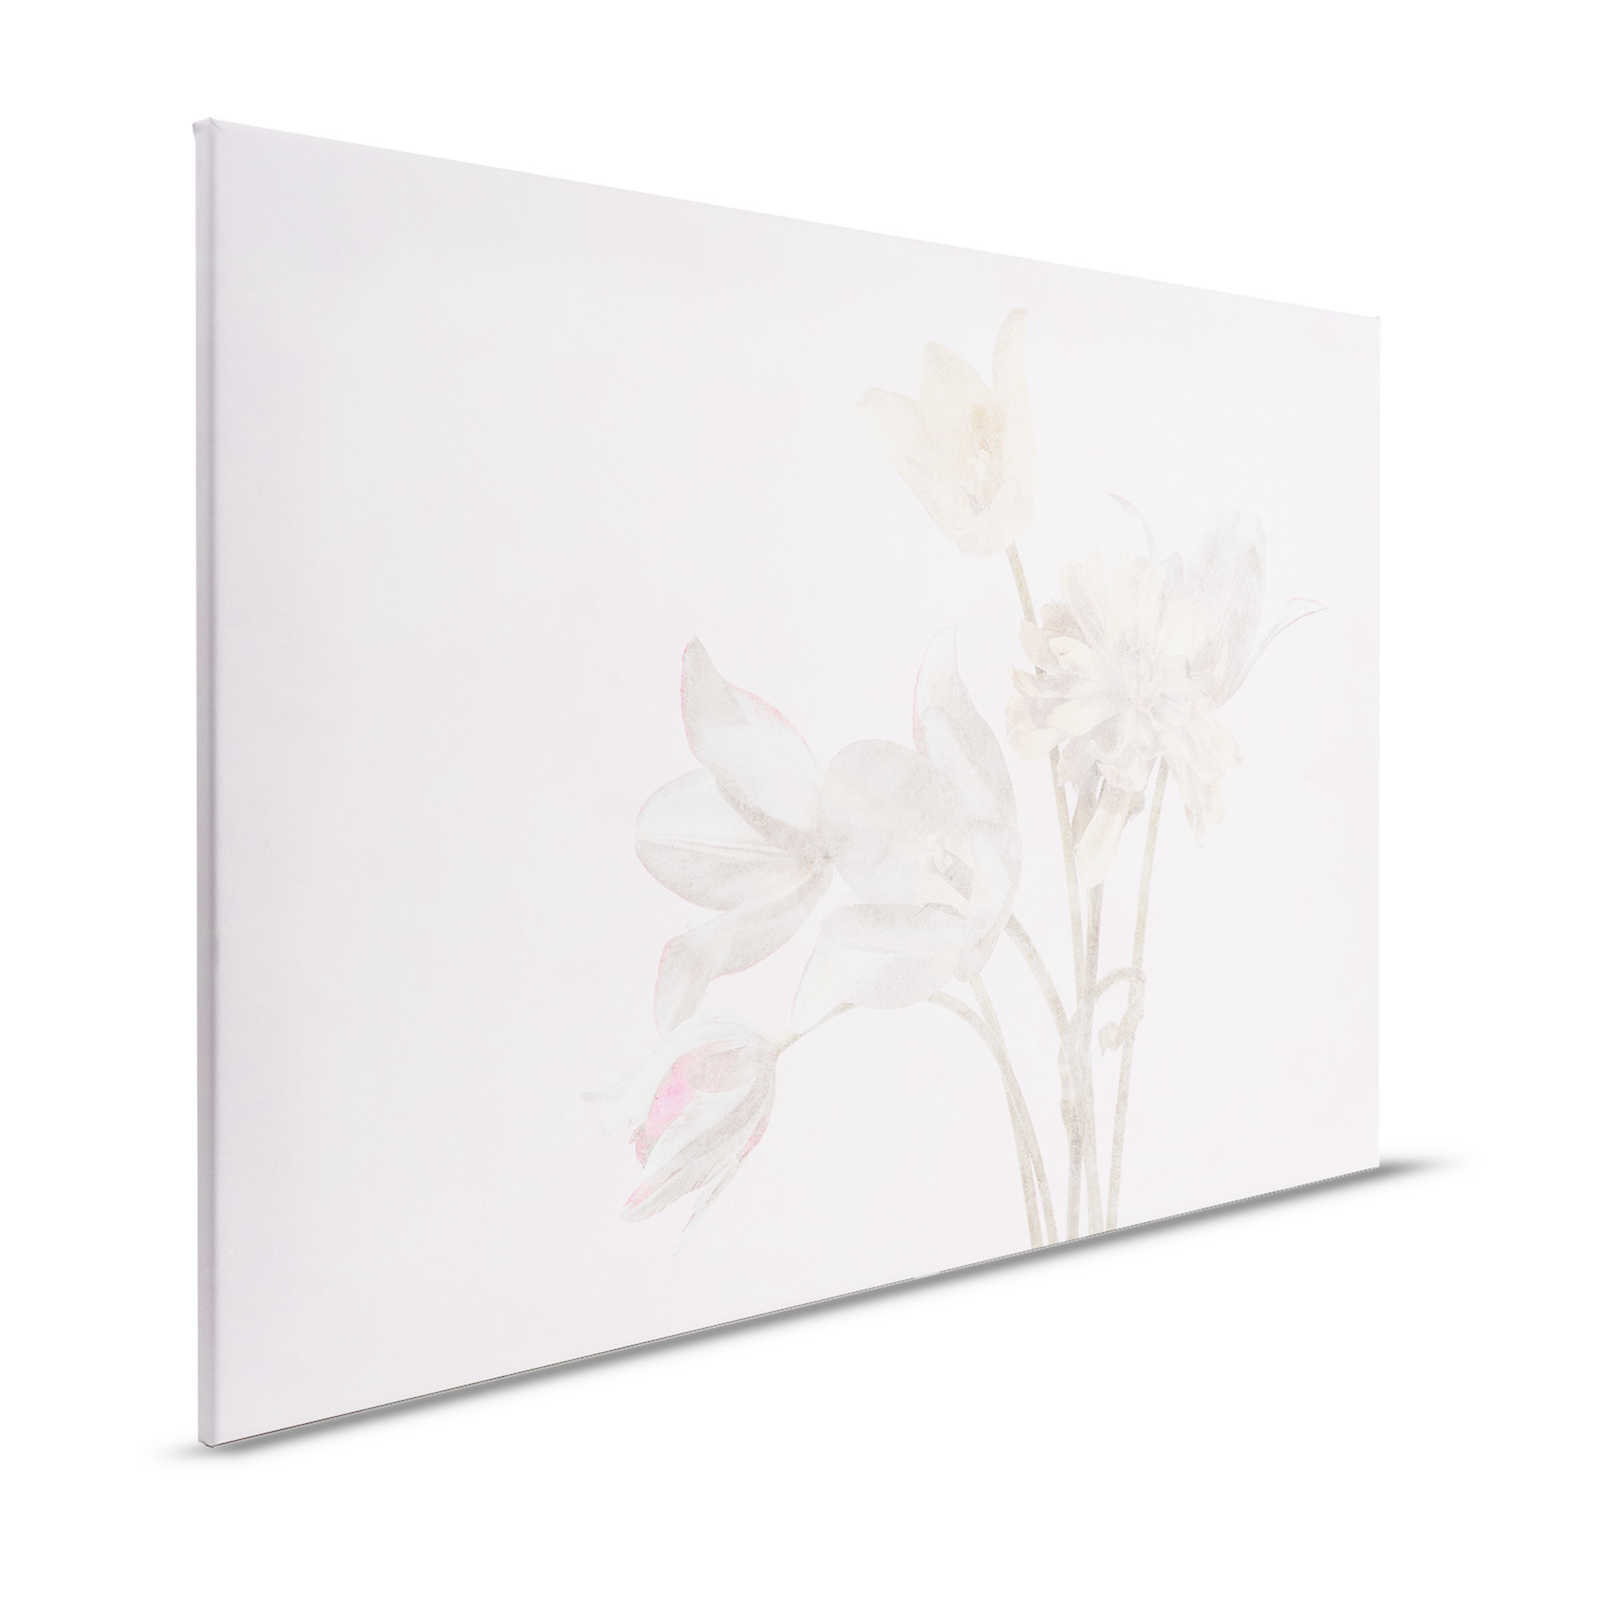 Morning Room 1 - Blumen Leinwandbild Blüten im verblassten Stil – 1,20 m x 0,80 m
